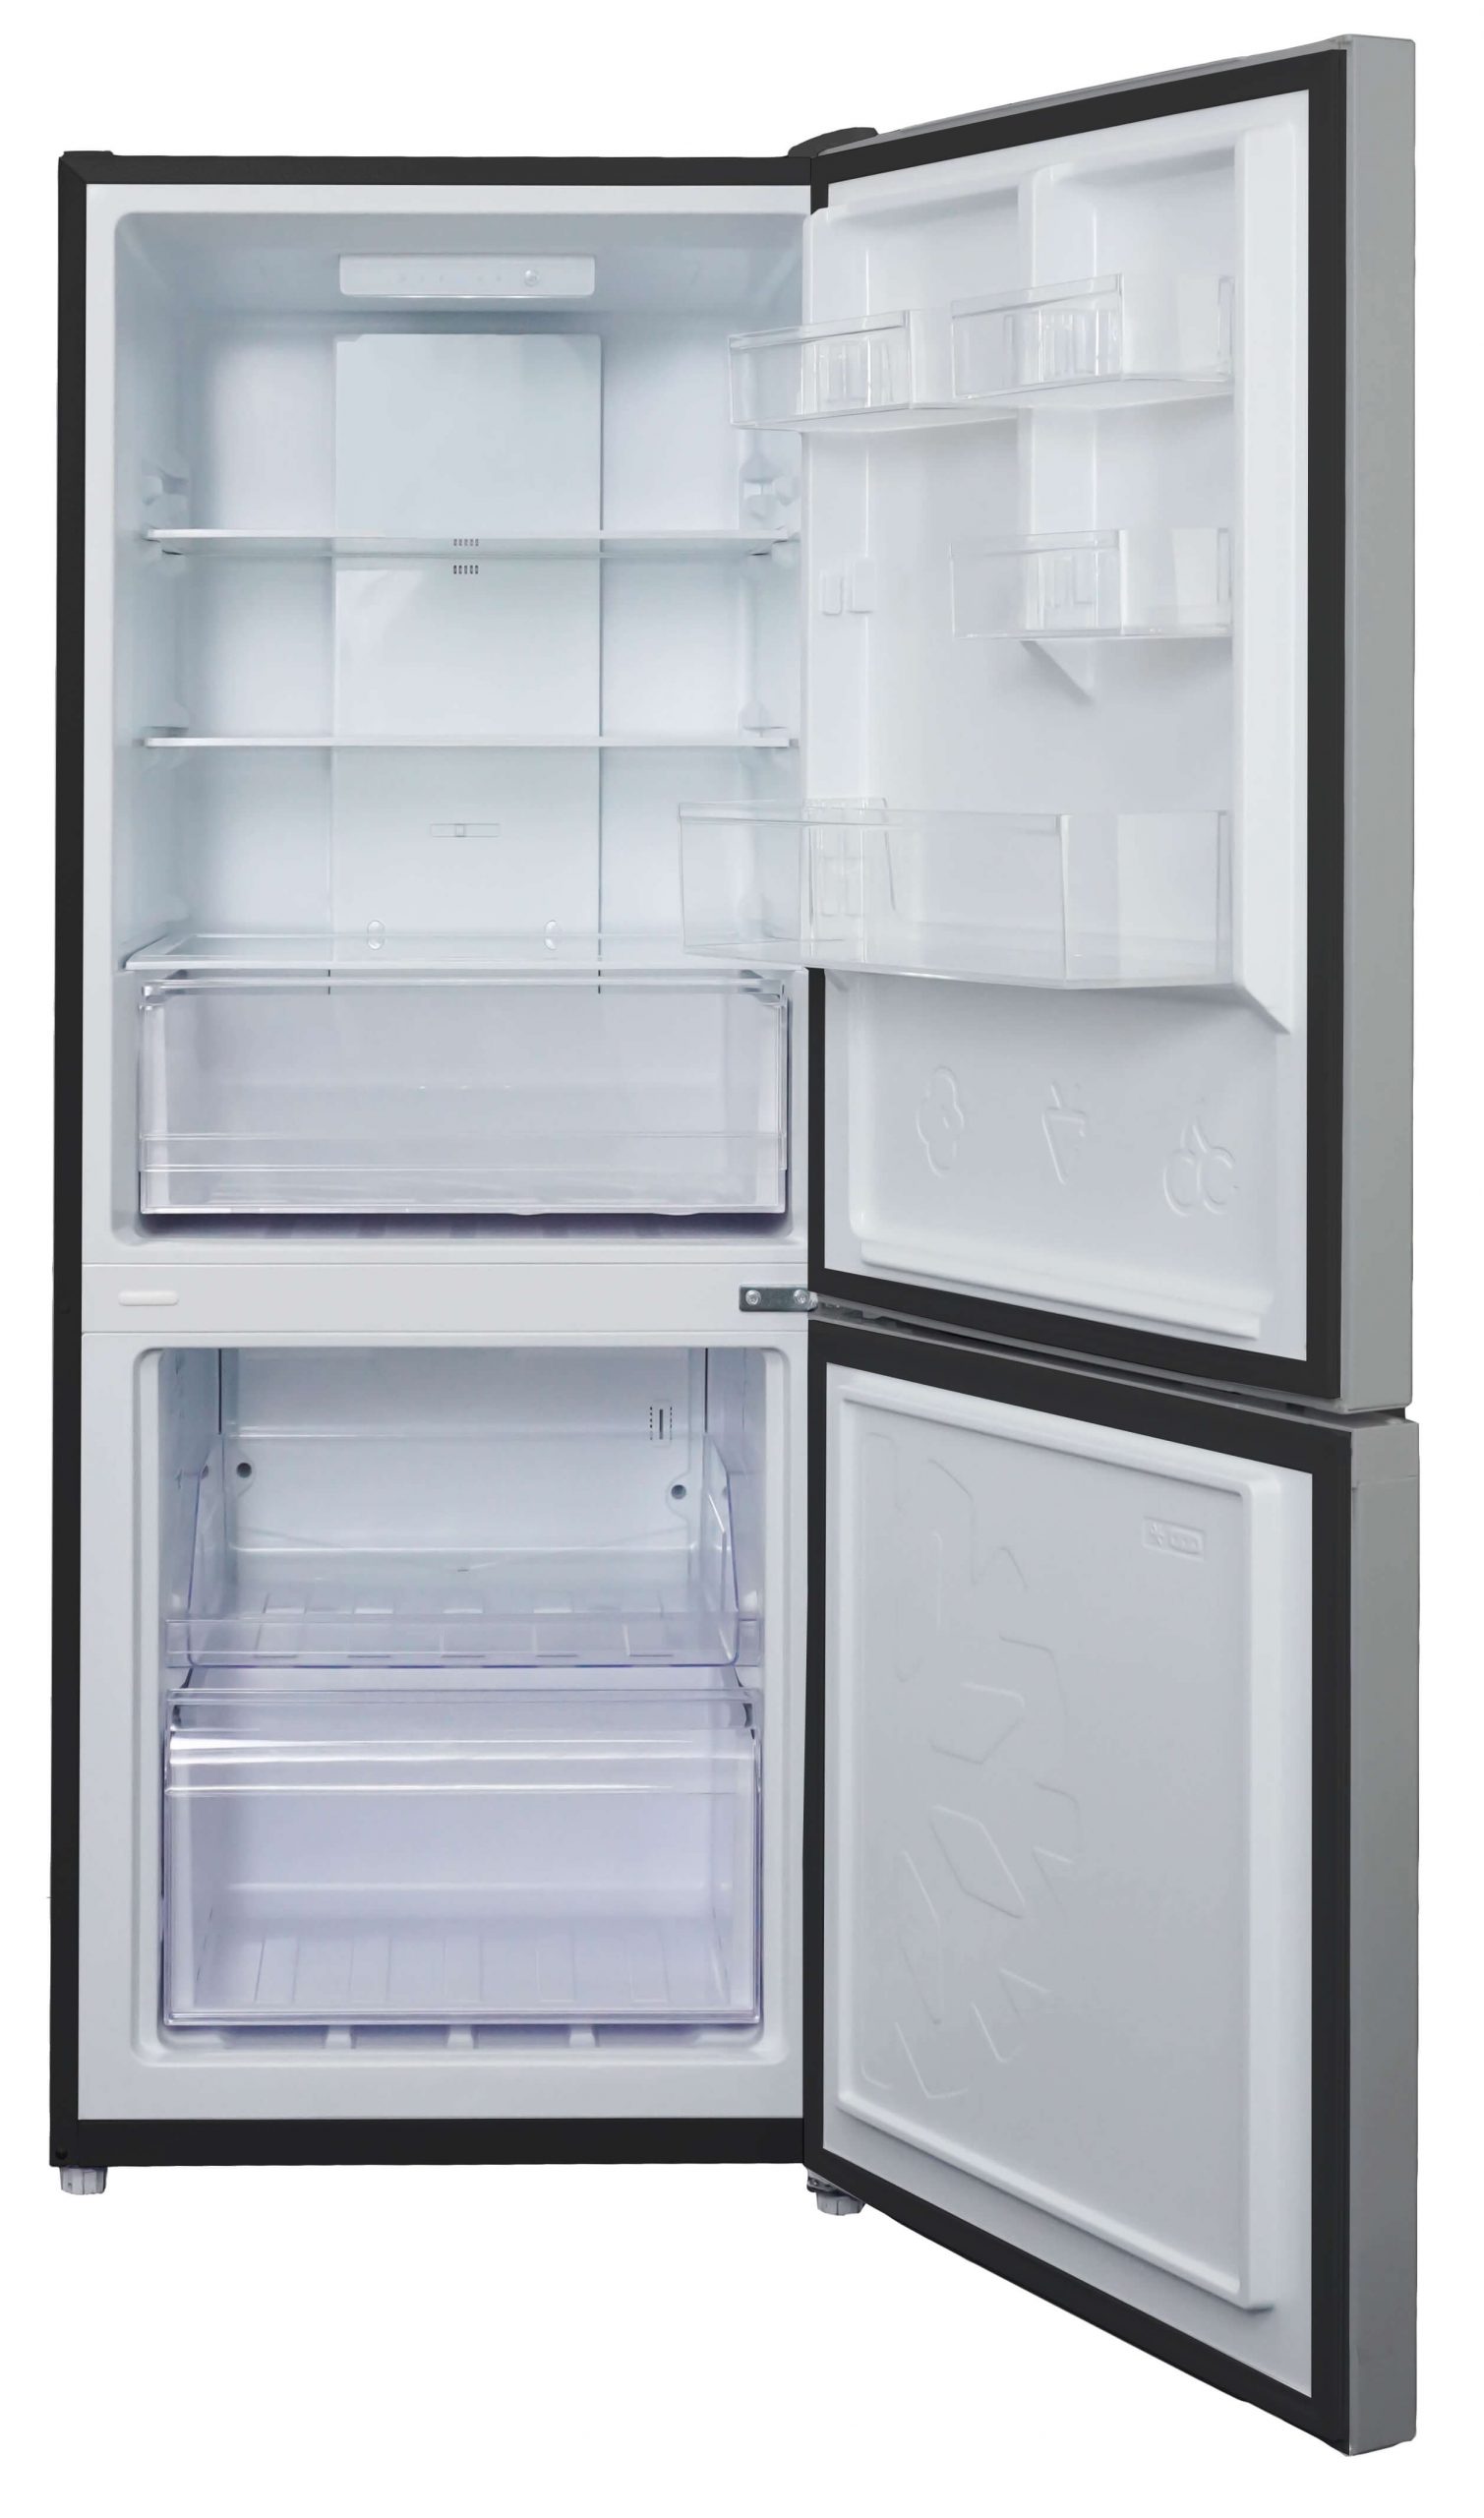 Danby 10 cu.ft Bottom Mount Refrigerator